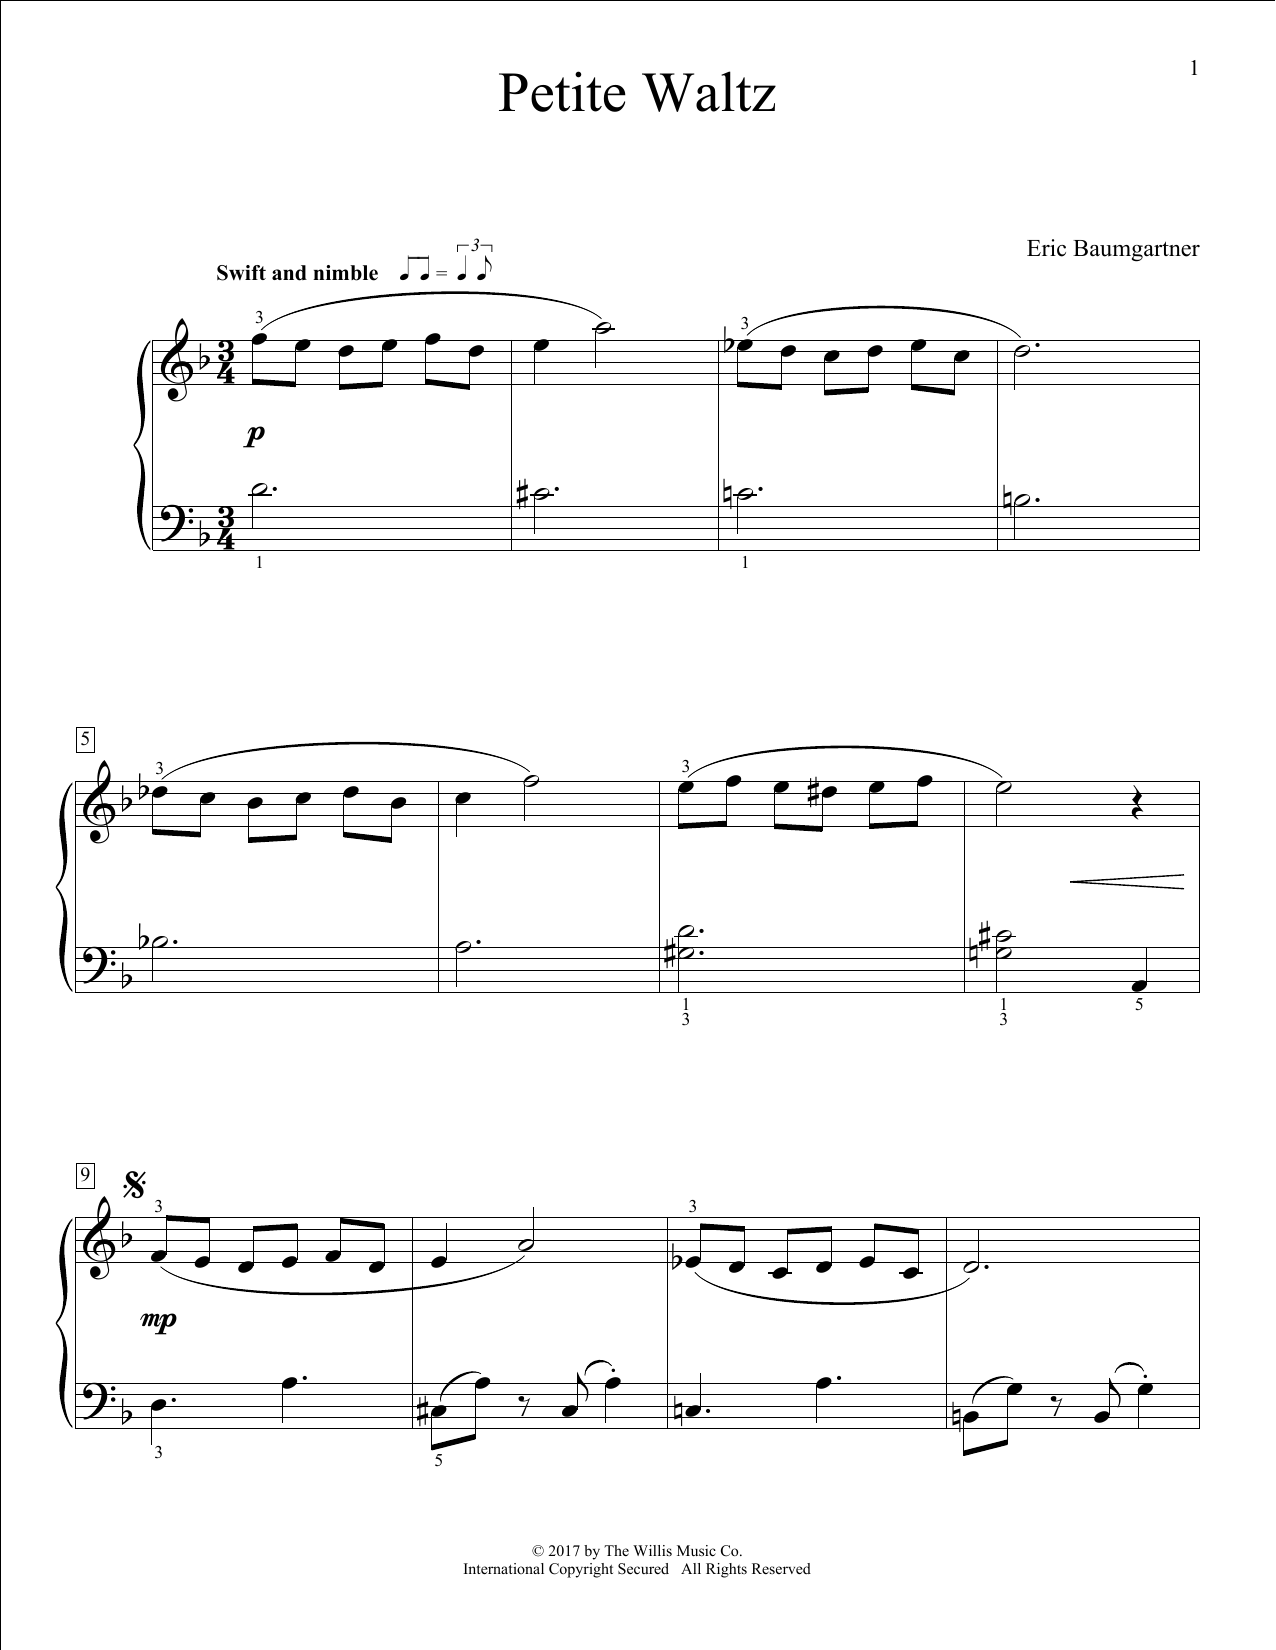 Download Eric Baumgartner Petite Waltz Sheet Music